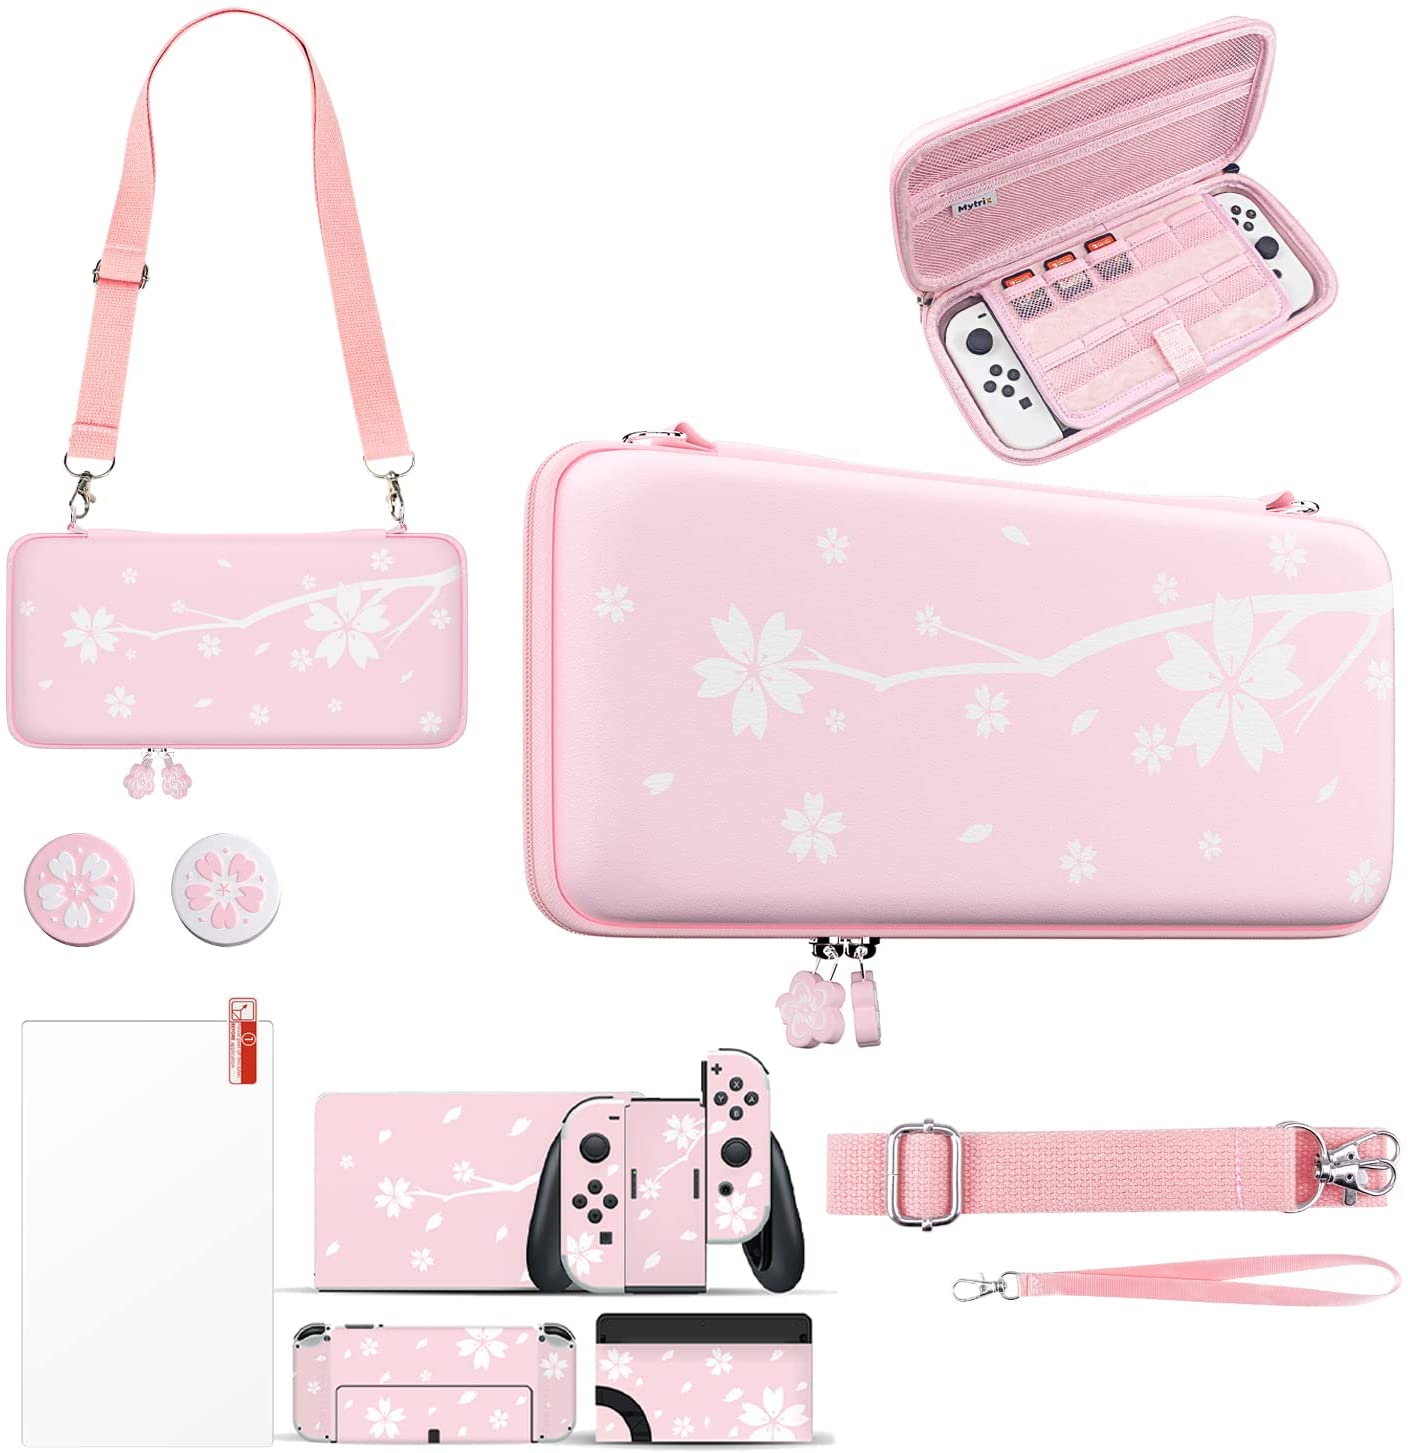 Mytrix Sakura Pink Carrying Case 4 in 1 Bundle for Nintendo Switch